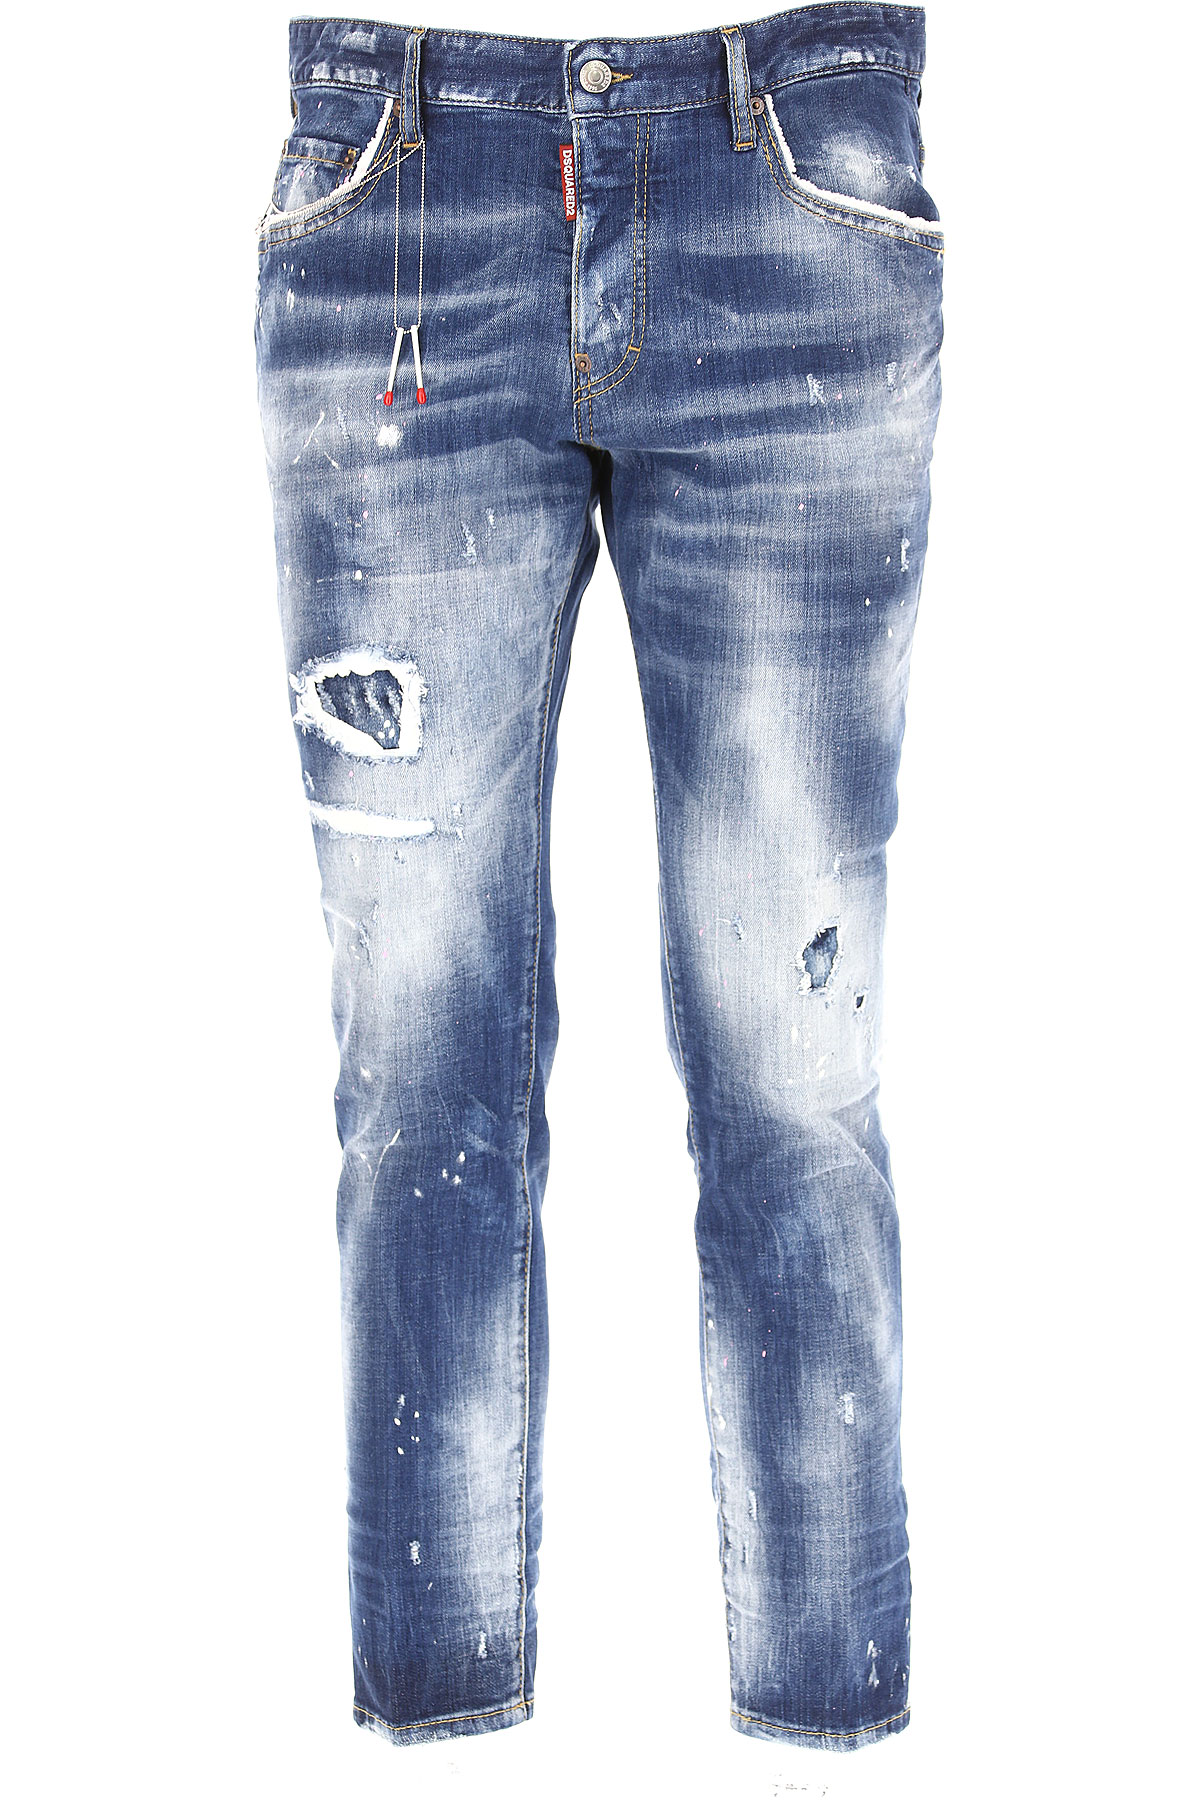 jeans dsquared 2018 uomo